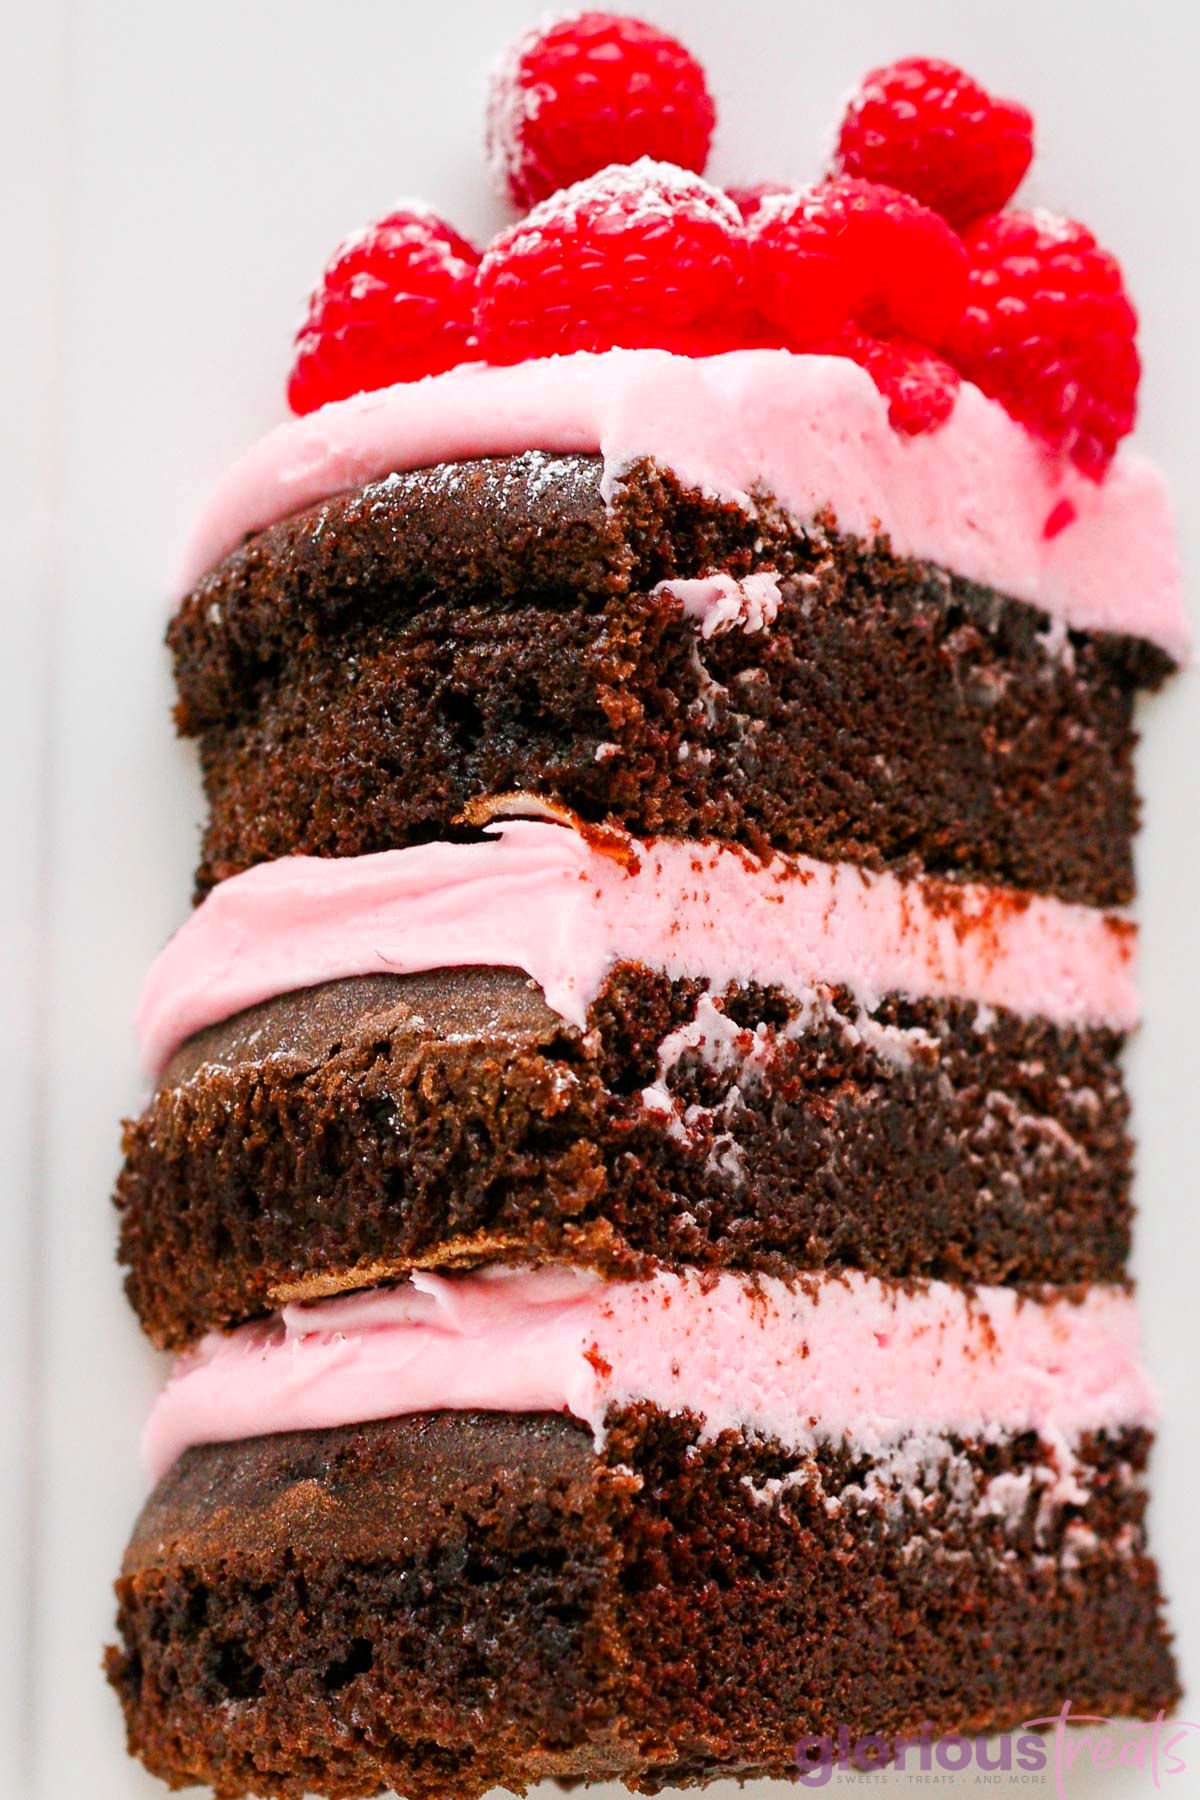 one generous three layer cake slice made with raspberry buttercream and fresh raspberries.